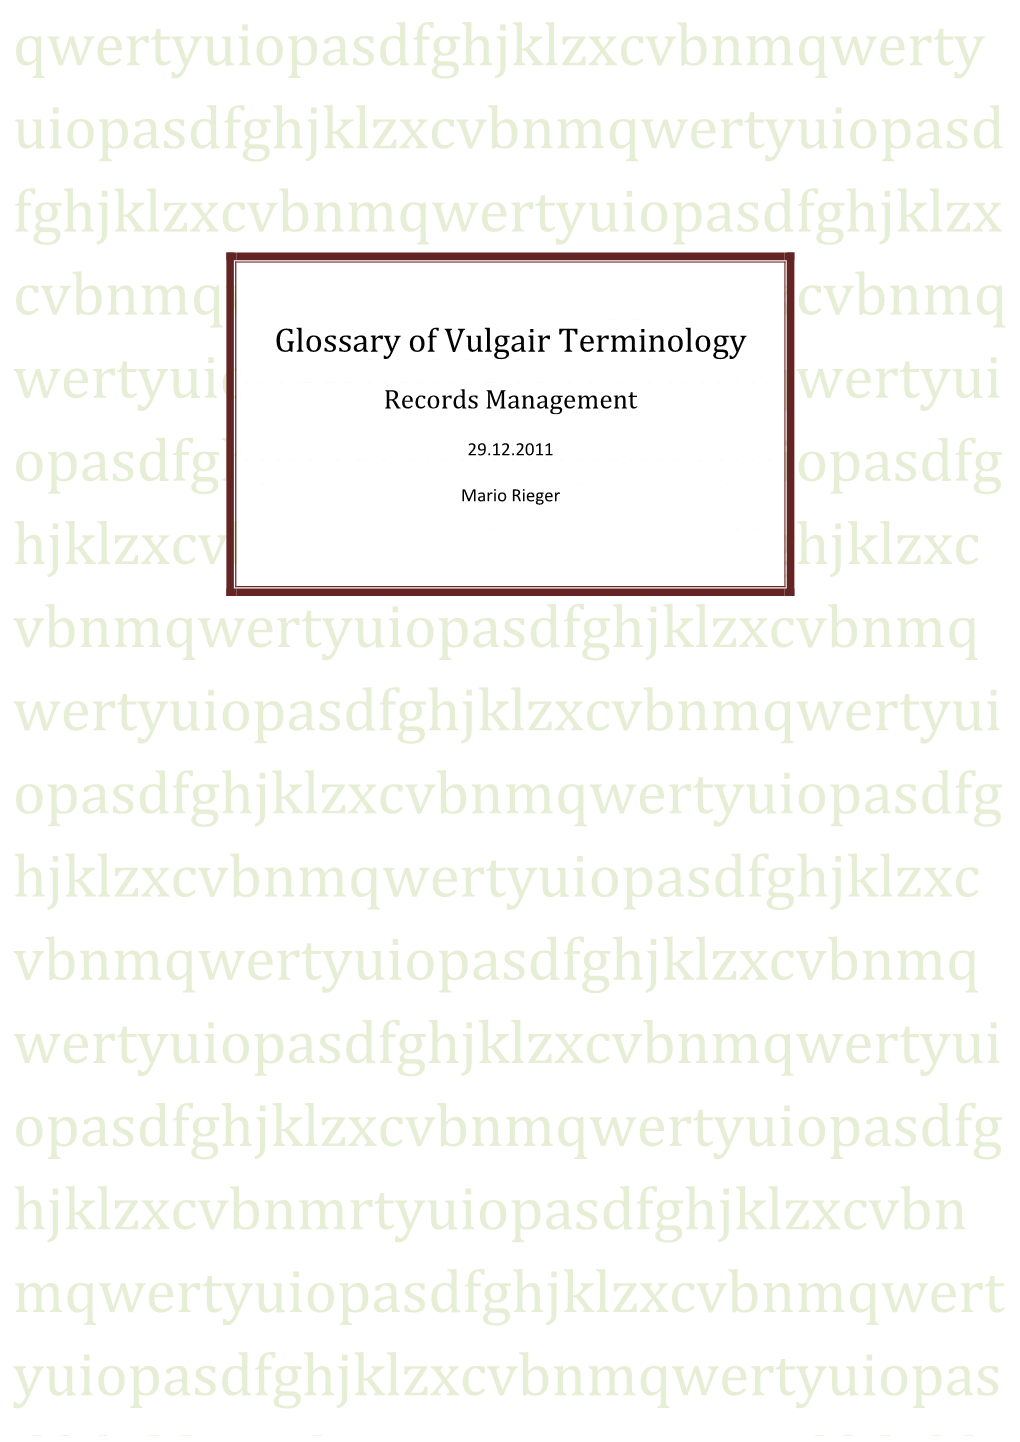 Glossary of Vulgair Terminology Wertyuiopasdfghjklzxcvbnmqwertyrecords Management Ui